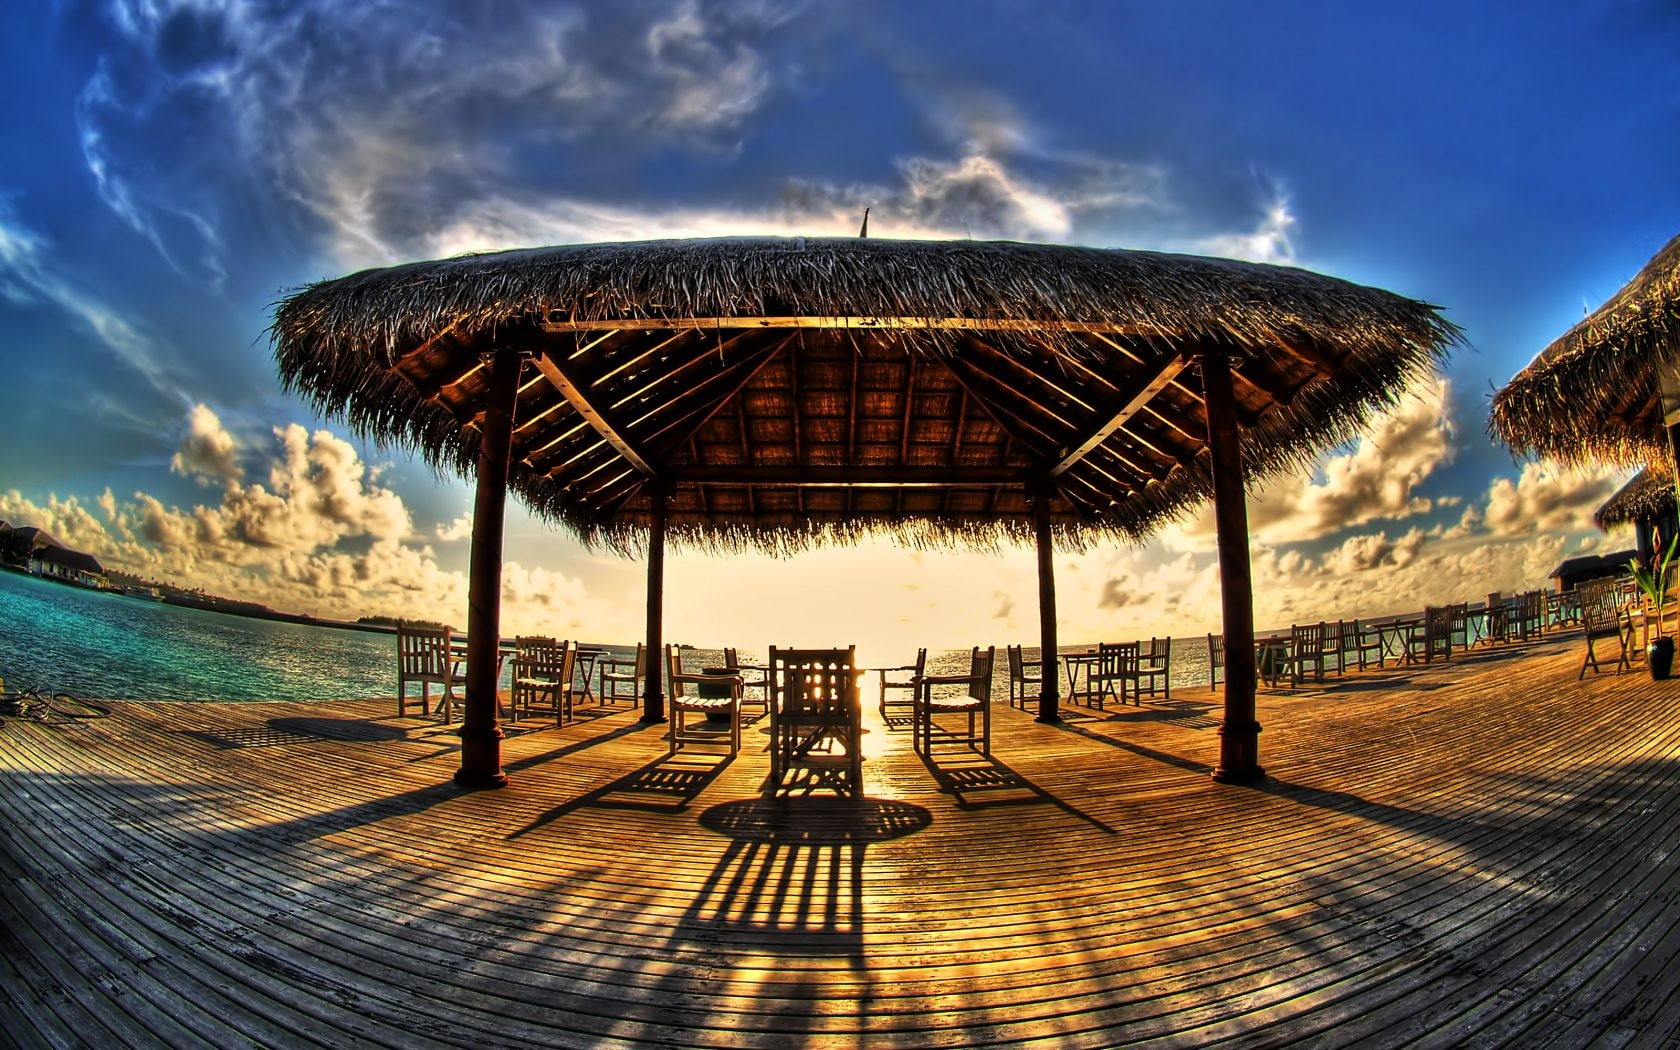 hut, HDR, beach, wooden surface, sunlight, fisheye lens, sky